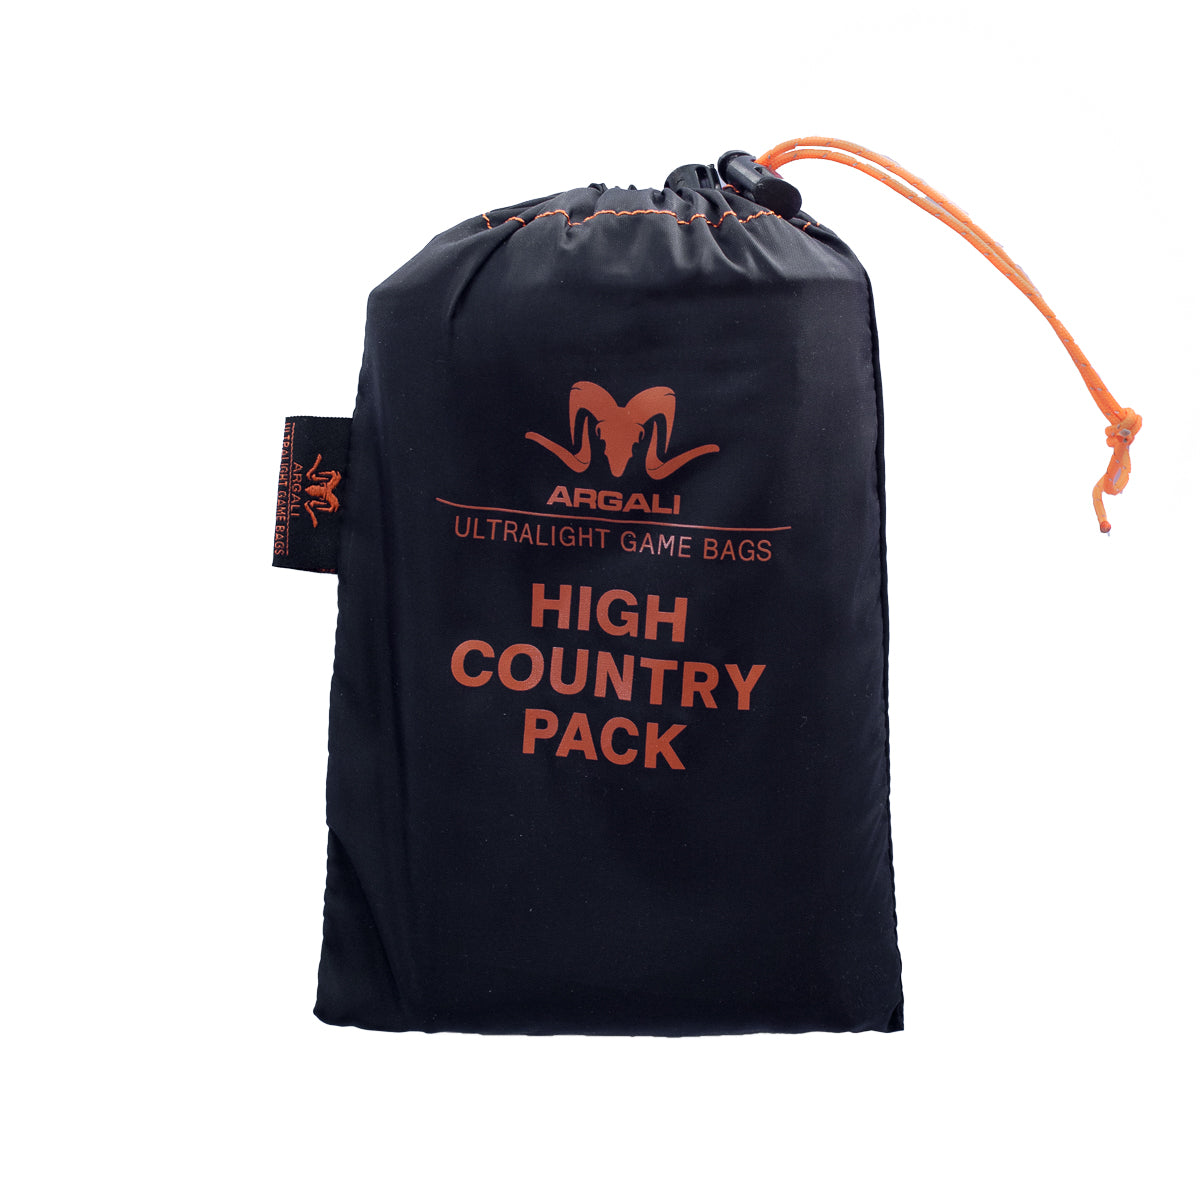 interieur schieten Voetzool Argali High Country Pack Ultralight Game Bags | argalioutdoors.com